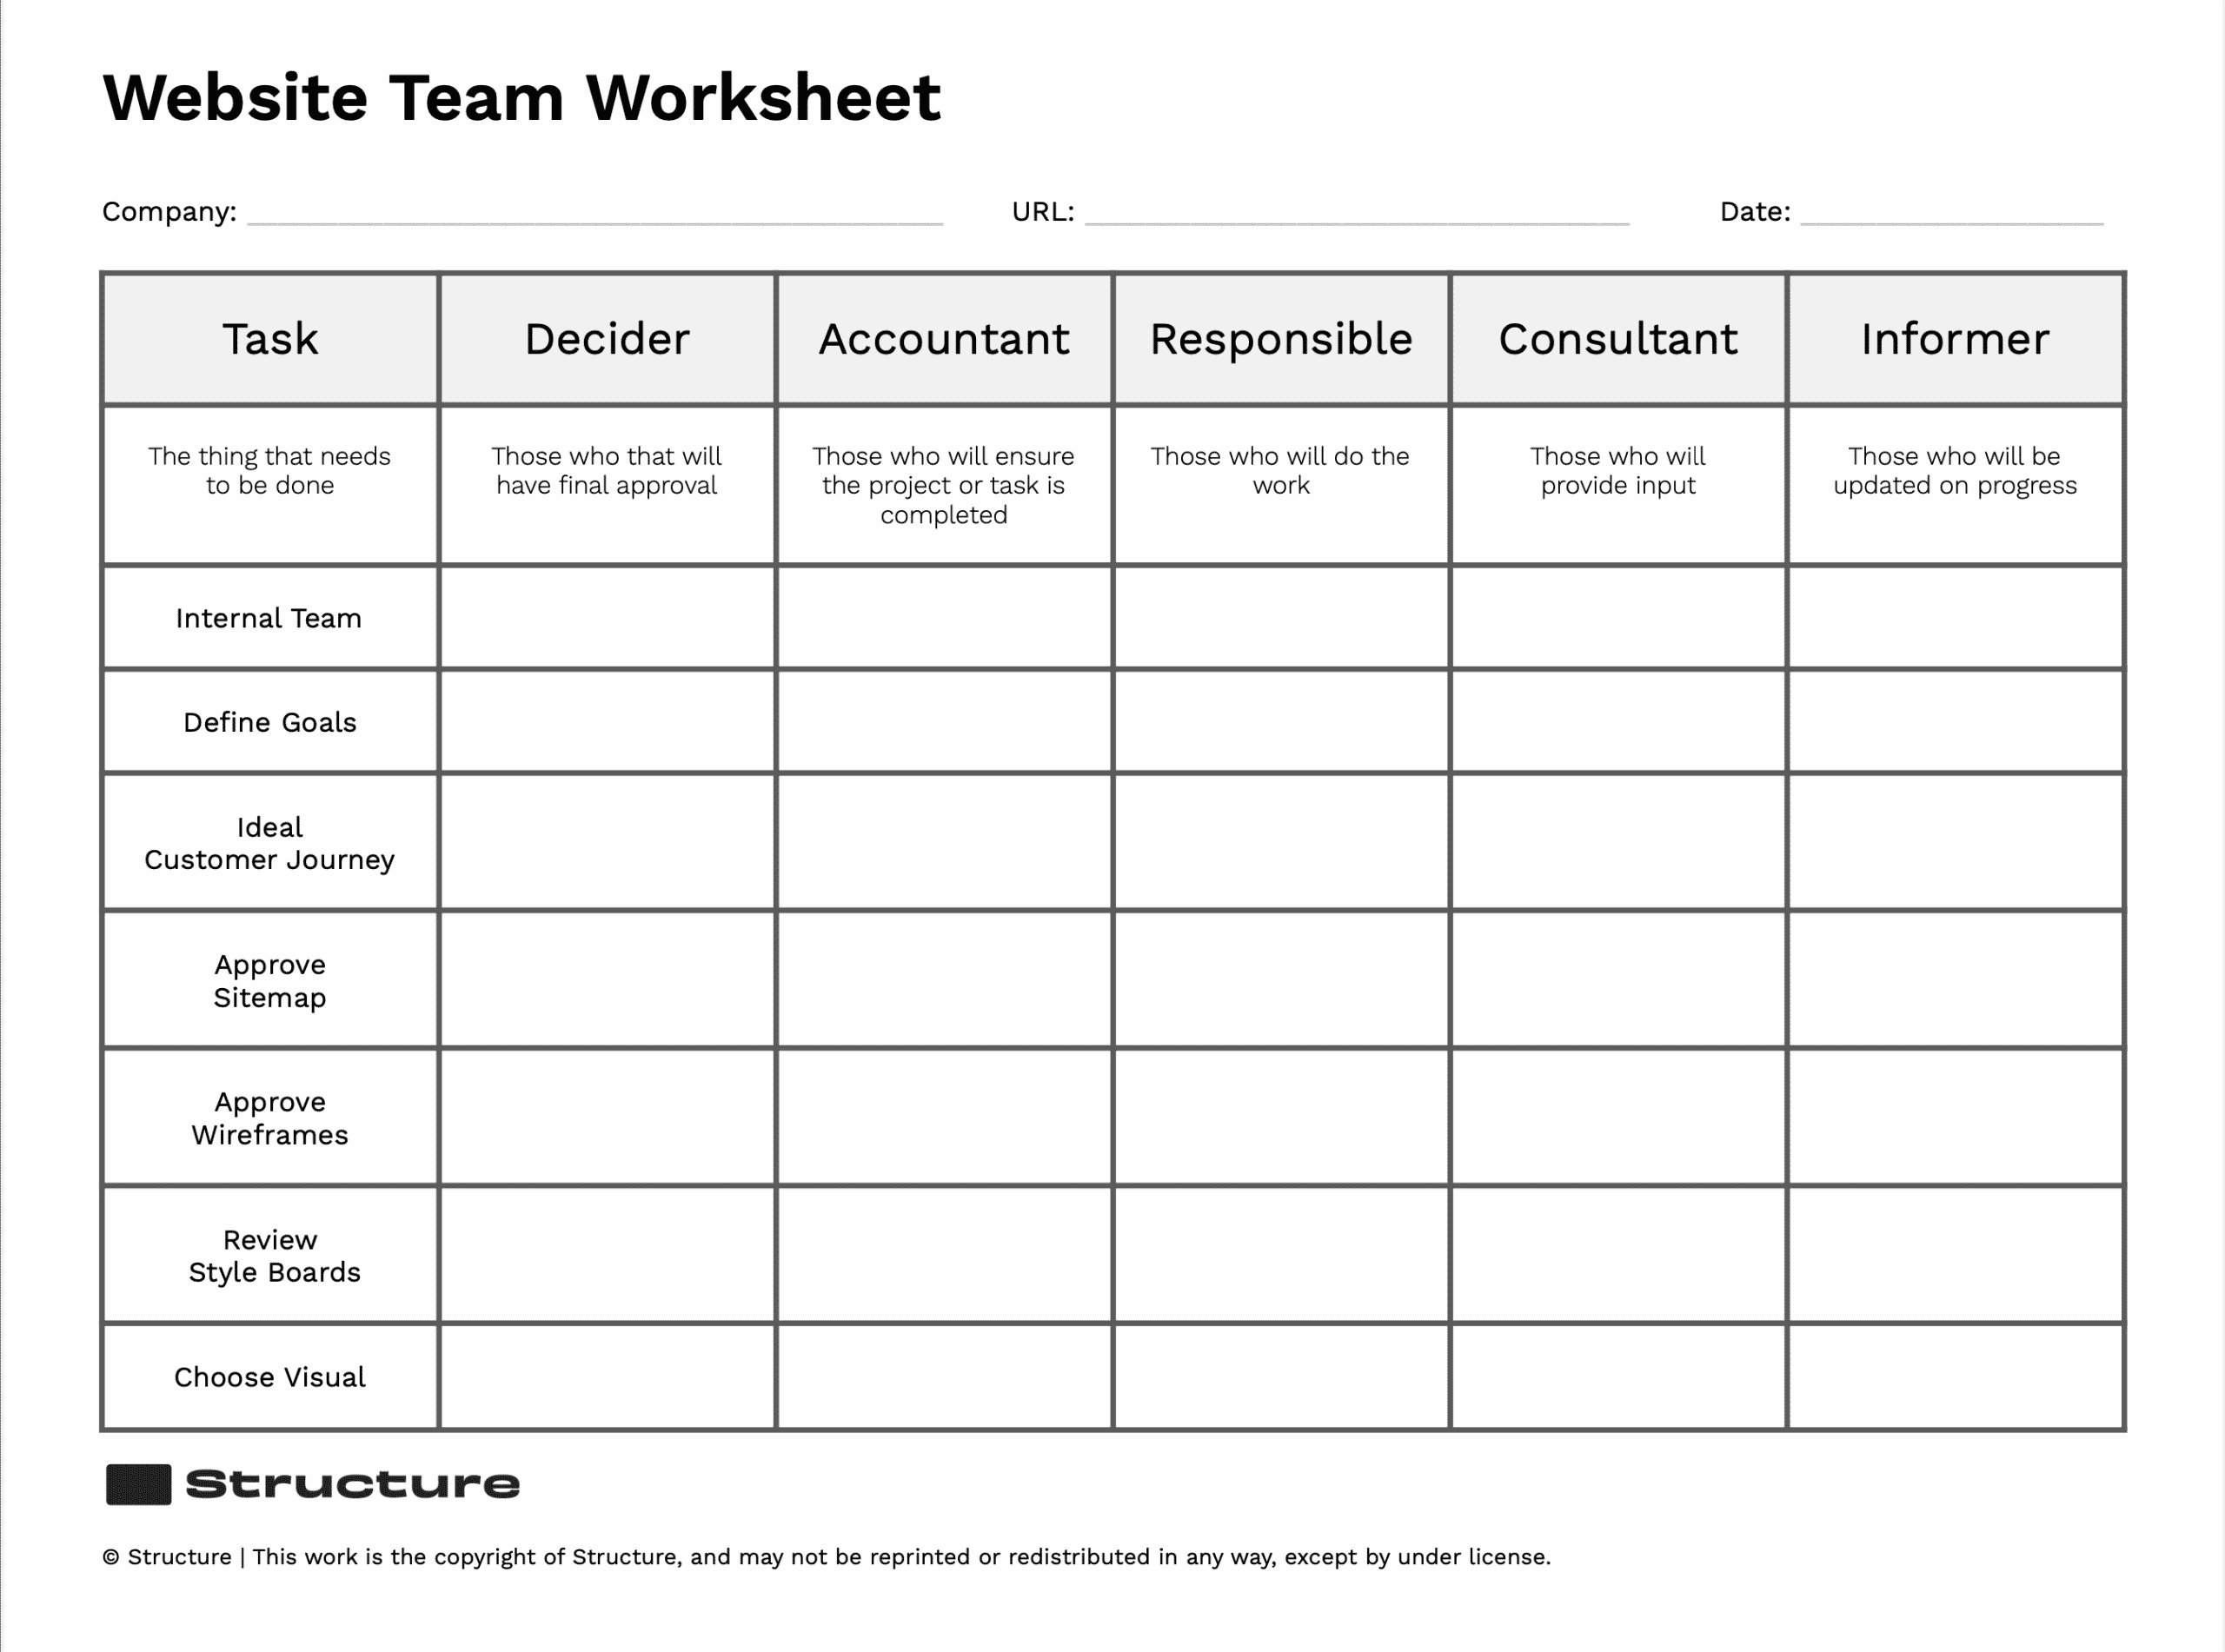 Website Team Worksheet 1 from the Structure Website Design Planning Guide